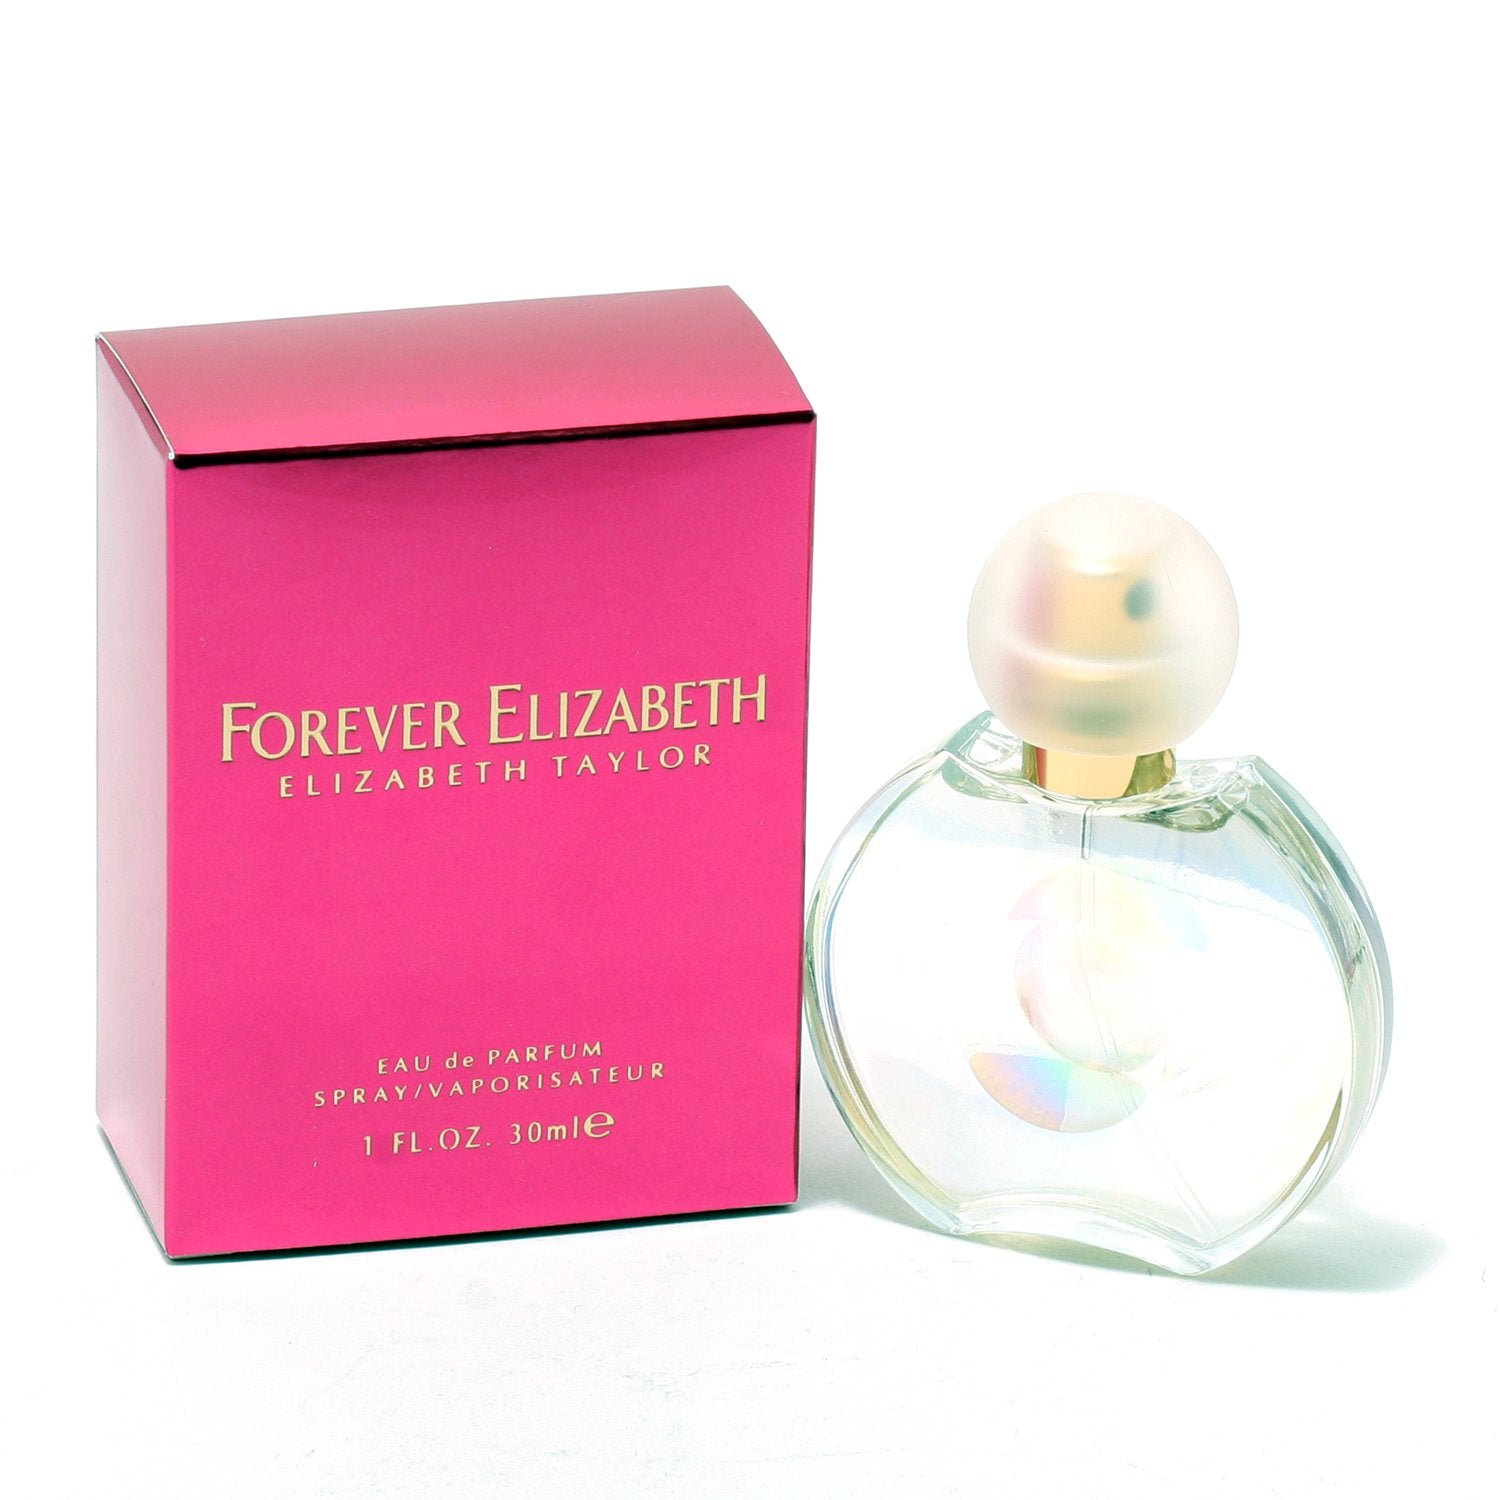 Perfume - FOREVER ELIZABETH FOR WOMEN BY ELIZABETH TAYLOR - EAU DE PARFUM SPRAY